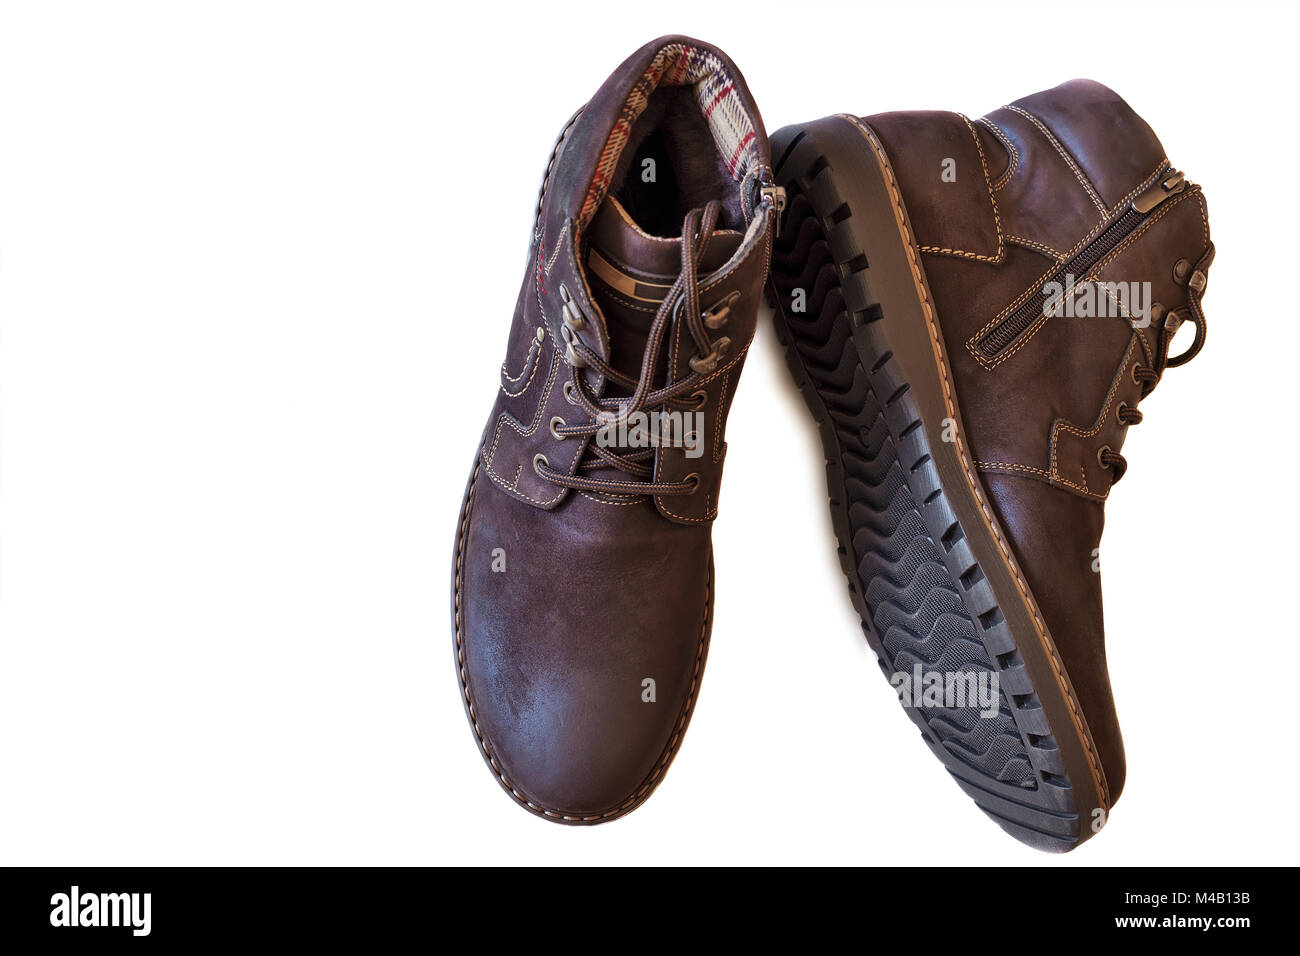 Zapatos impermeables para hombre fotografías e imágenes de alta - Alamy